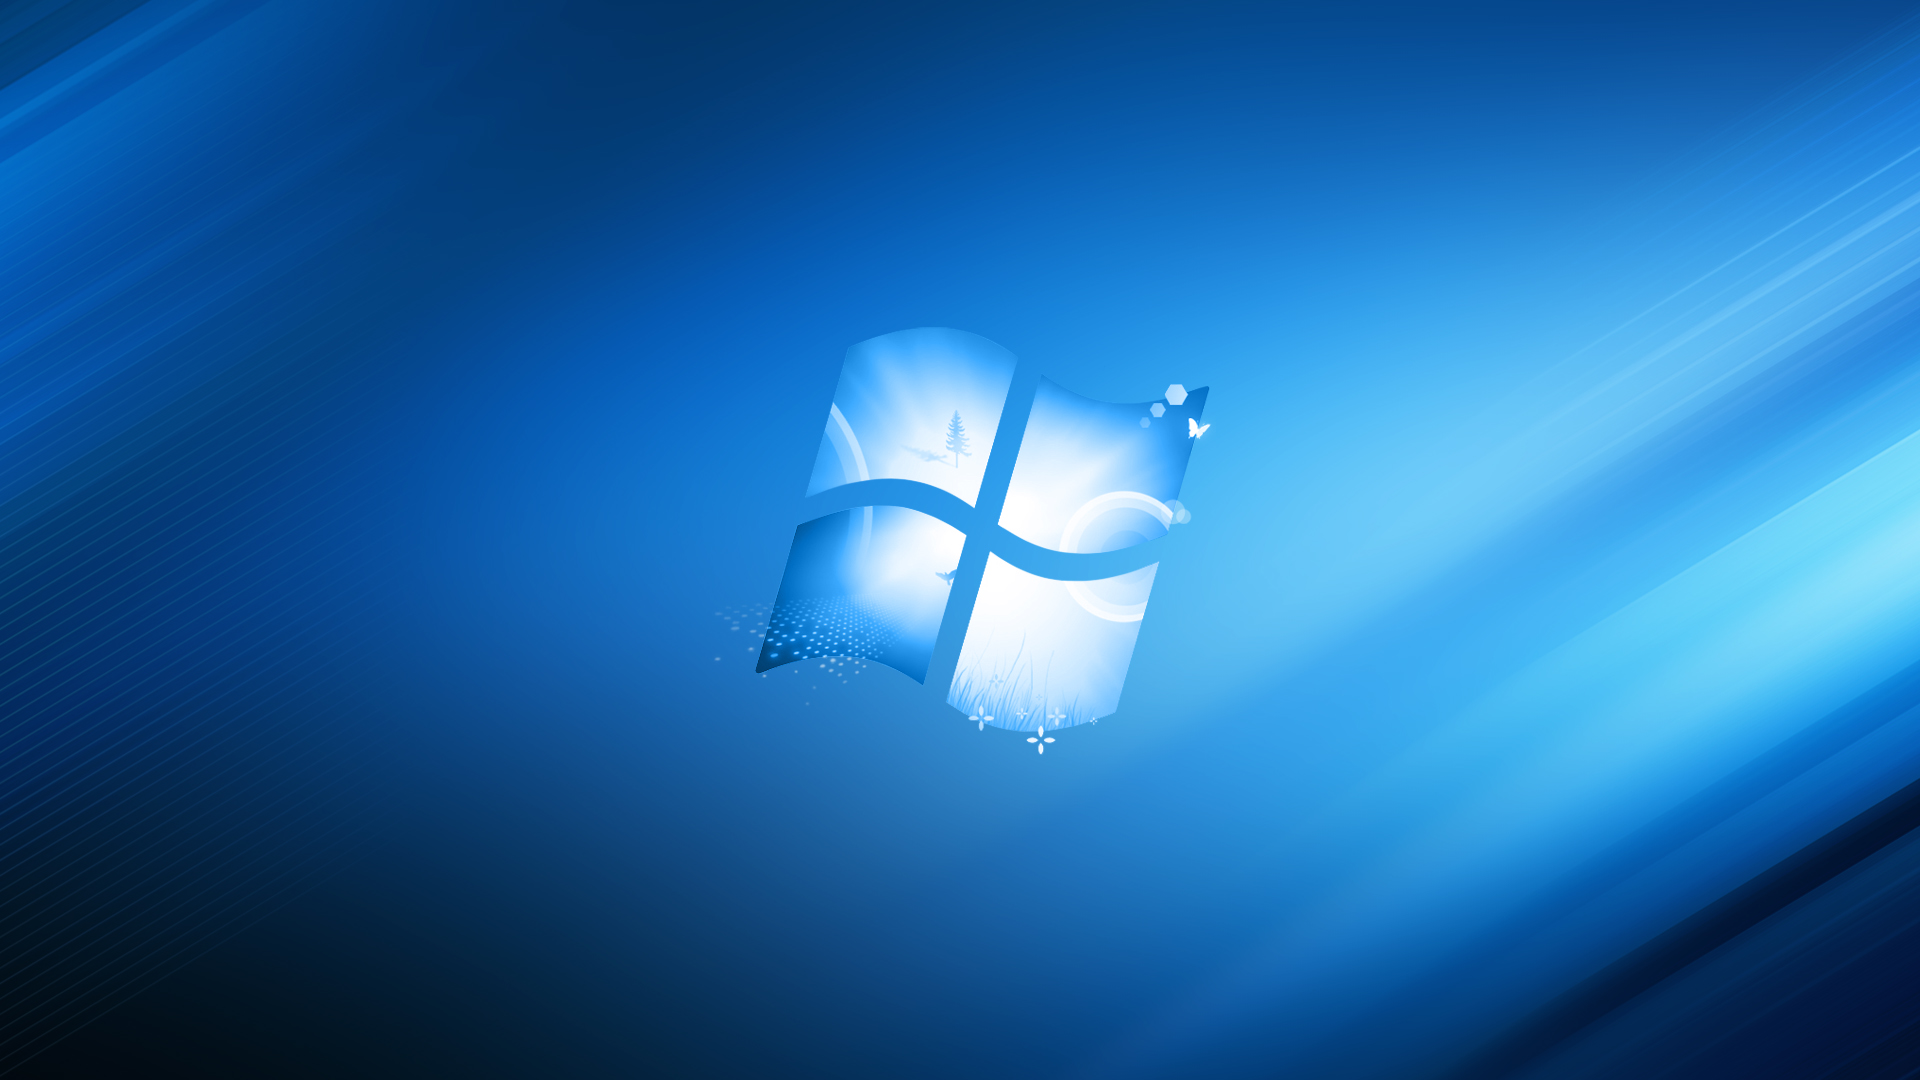 Windows 8 Wallpaper 7 windows 8 28120576 1920 1080jpg 1920x1080